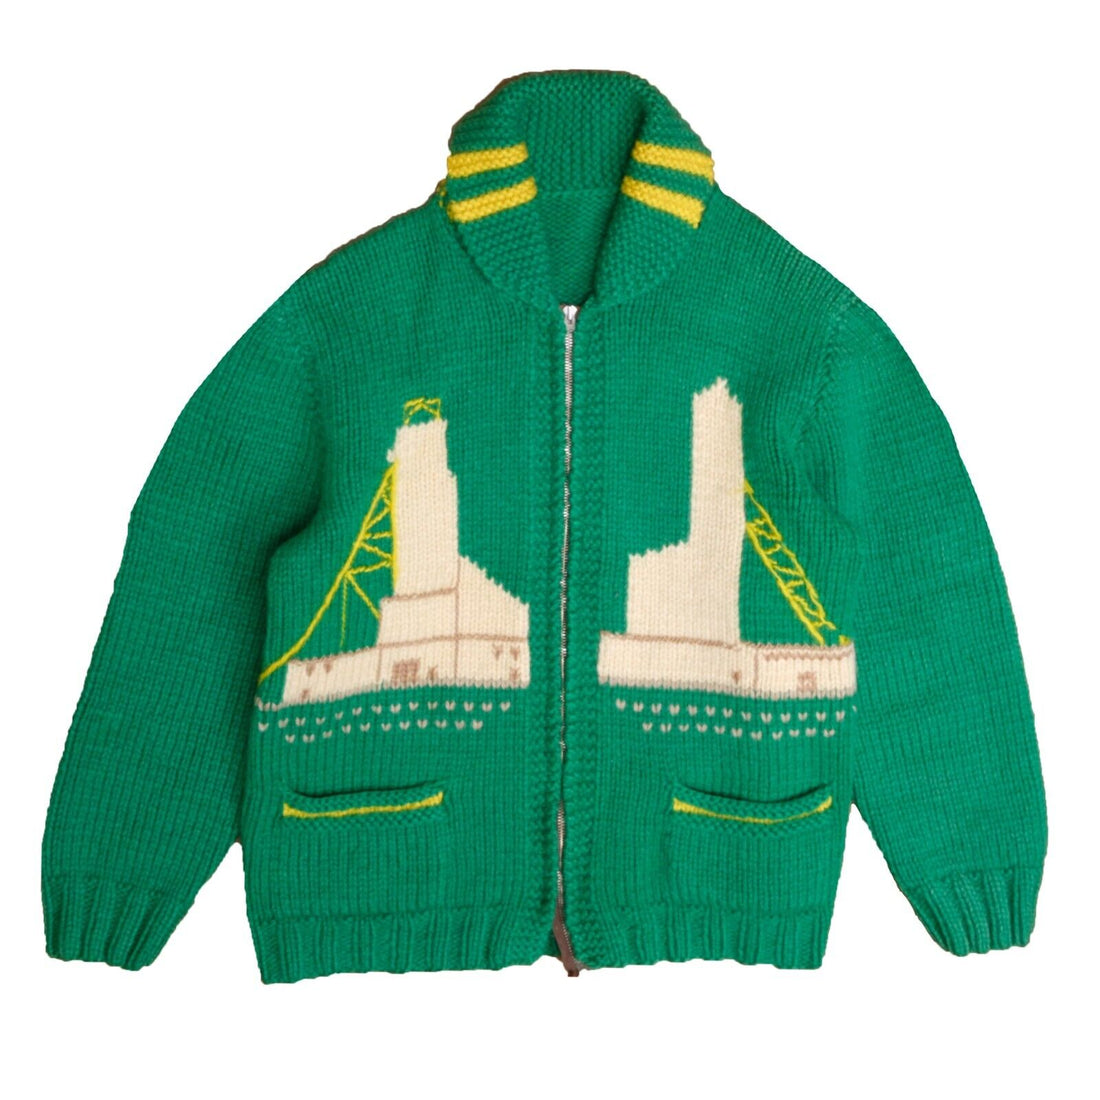 Vintage Farm Barn Wool Knit Cowichan Cardigan Sweater Medium Green Lightning Zip